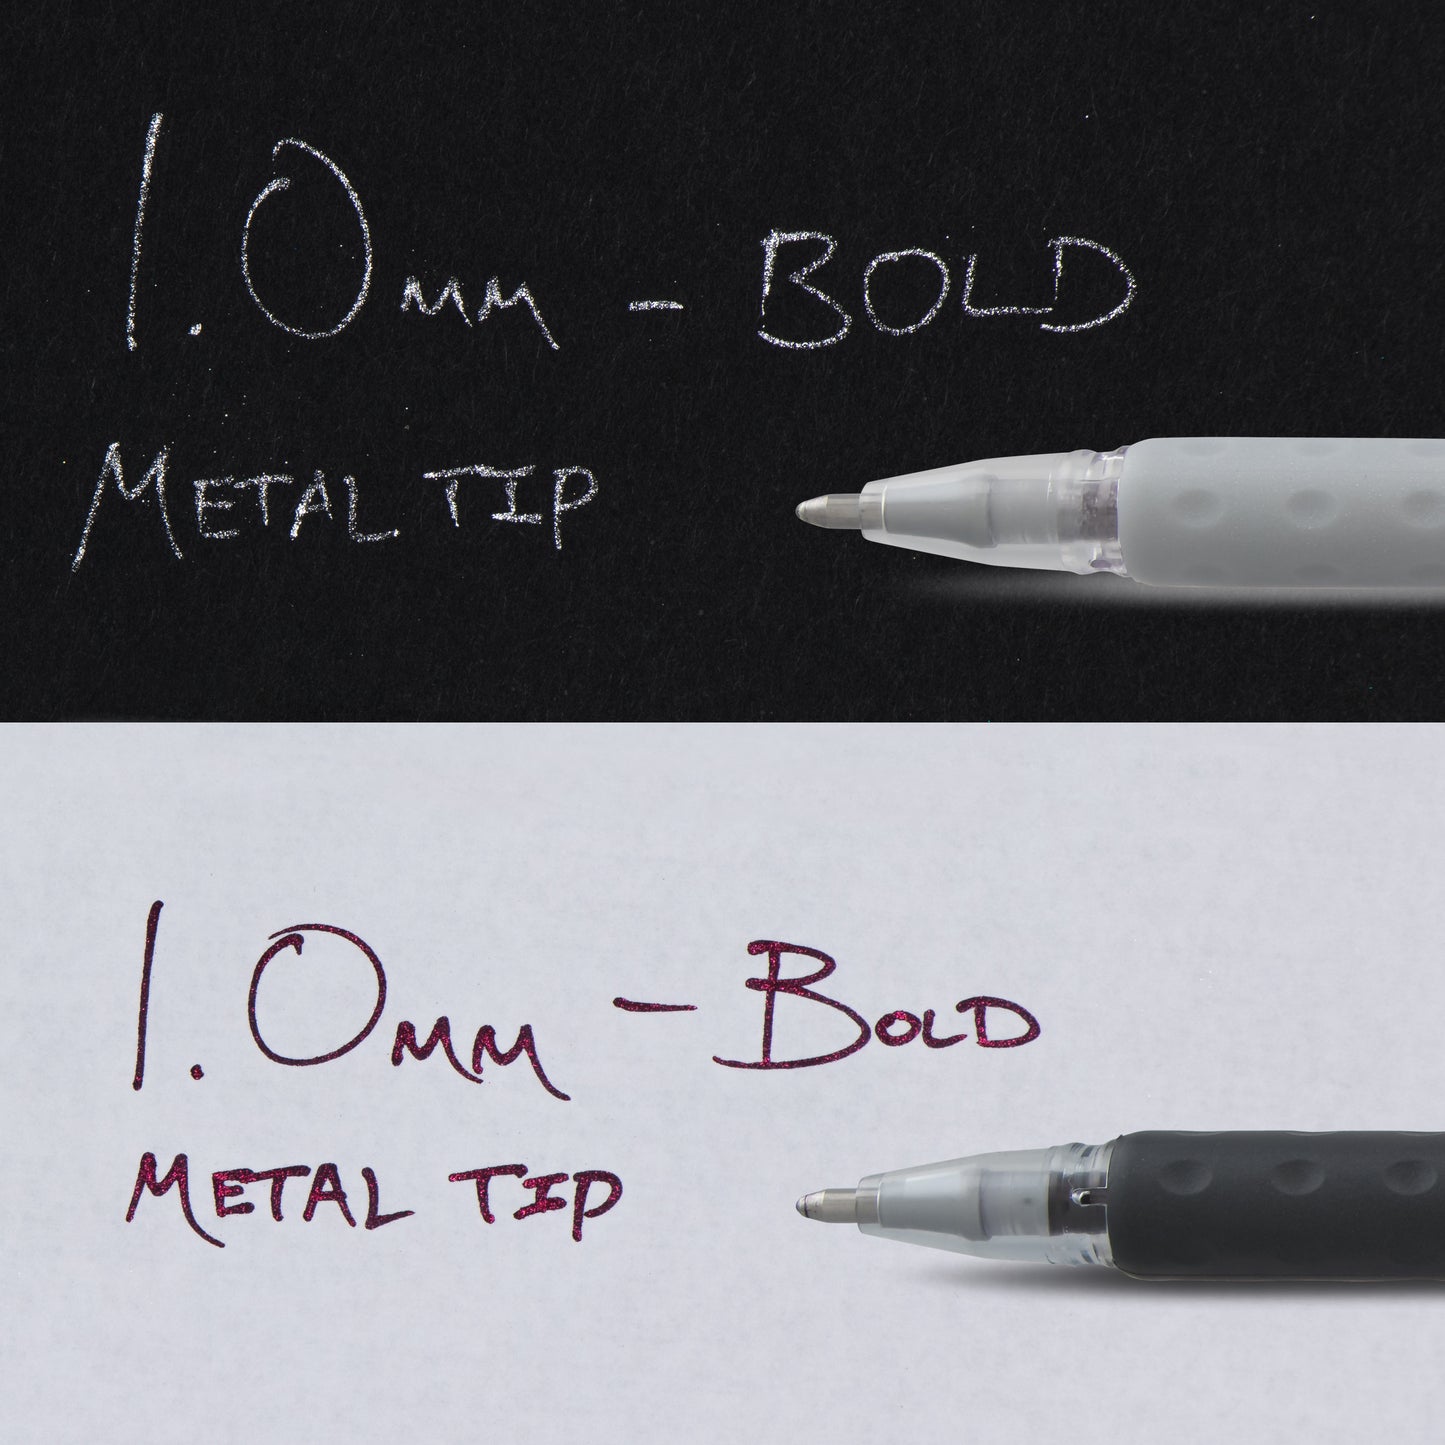 Pentel® Sparkle Pop™ Assorted Bold Metallic Gel Pen Set